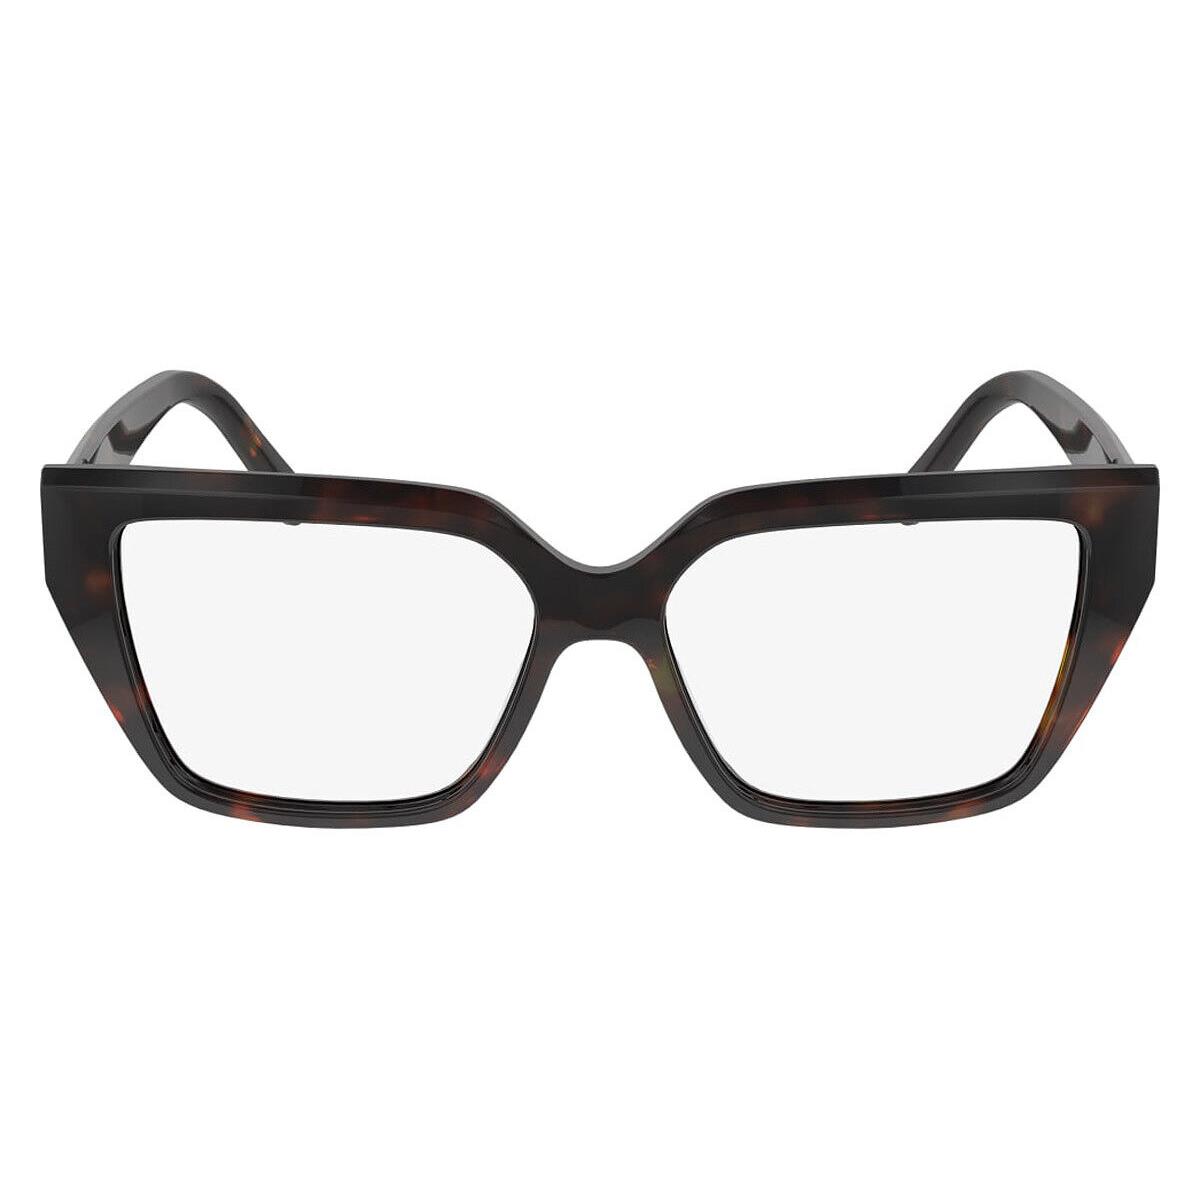 Salvatore Ferragamo Sfg Eyeglasses Women Dark Tortoise 53mm